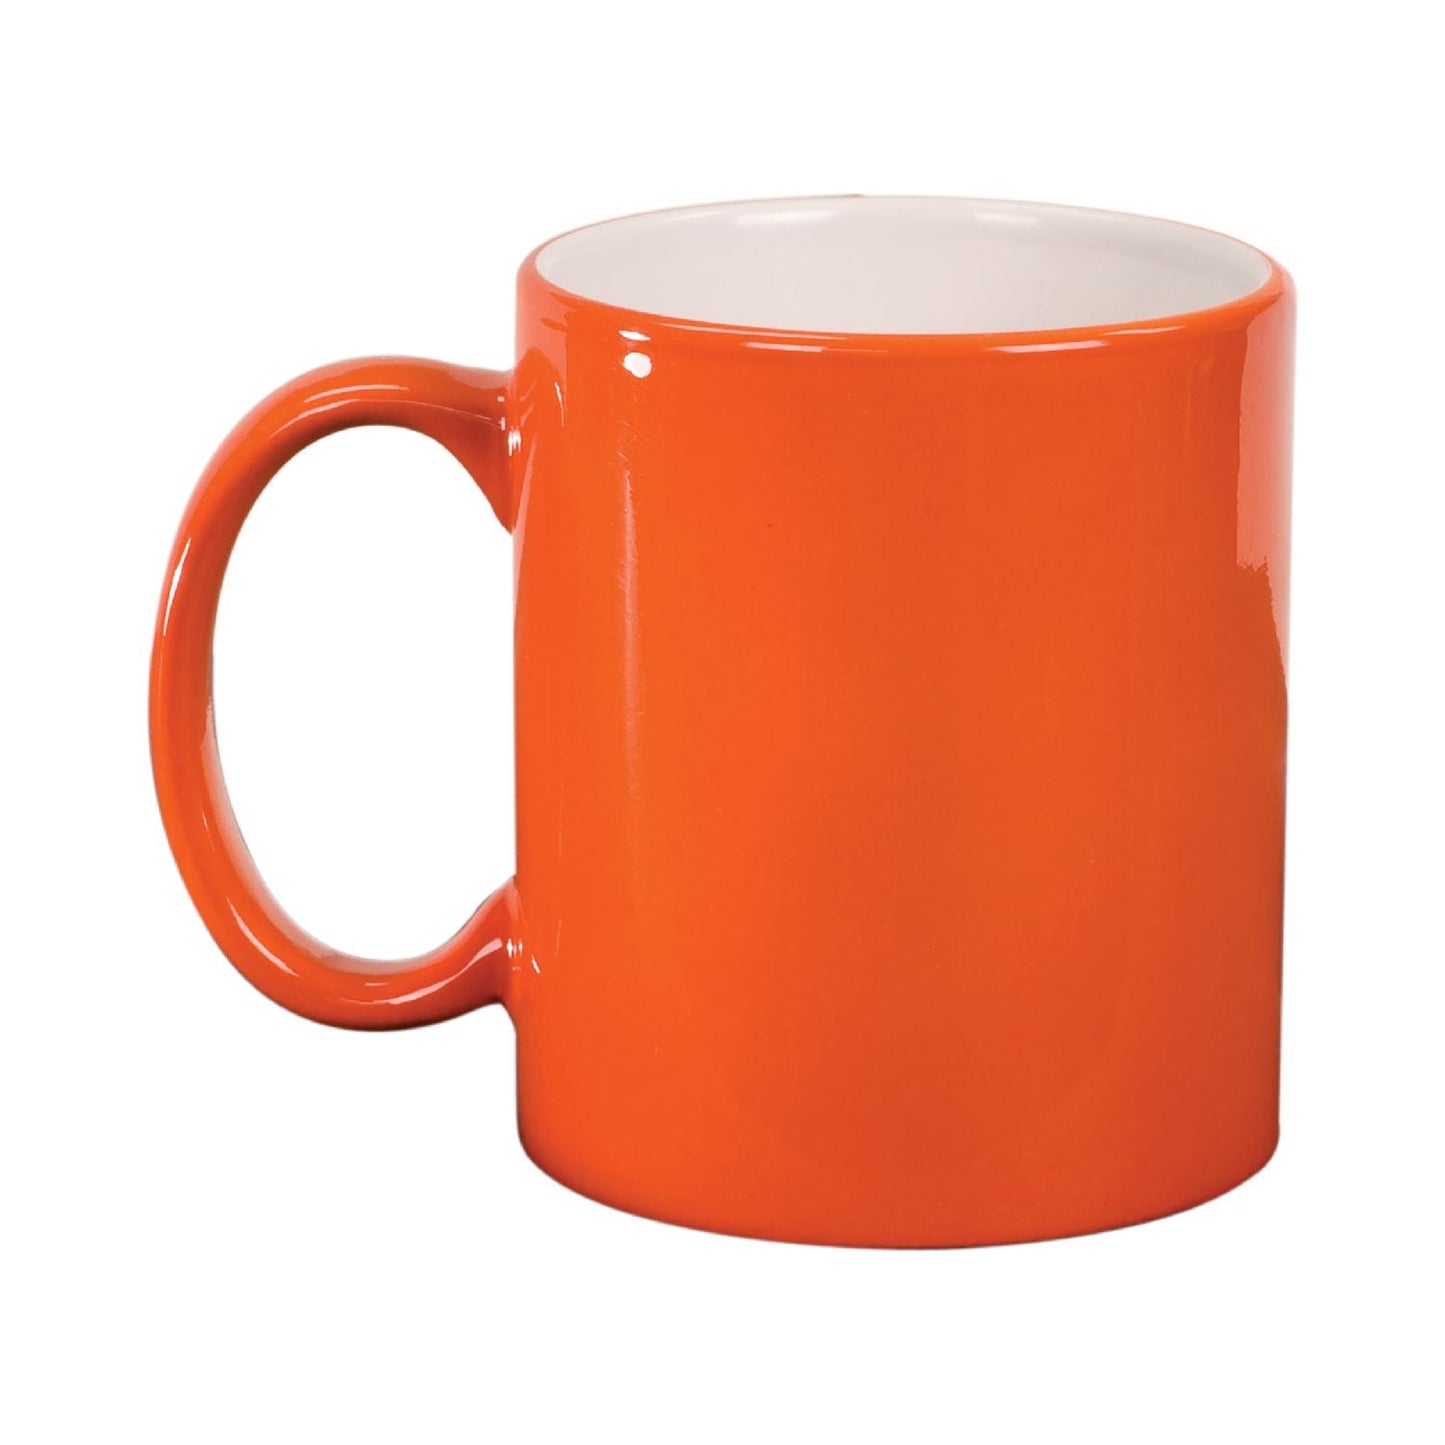 TEE - Ceramic Coffee Cup -11oz - MERCH